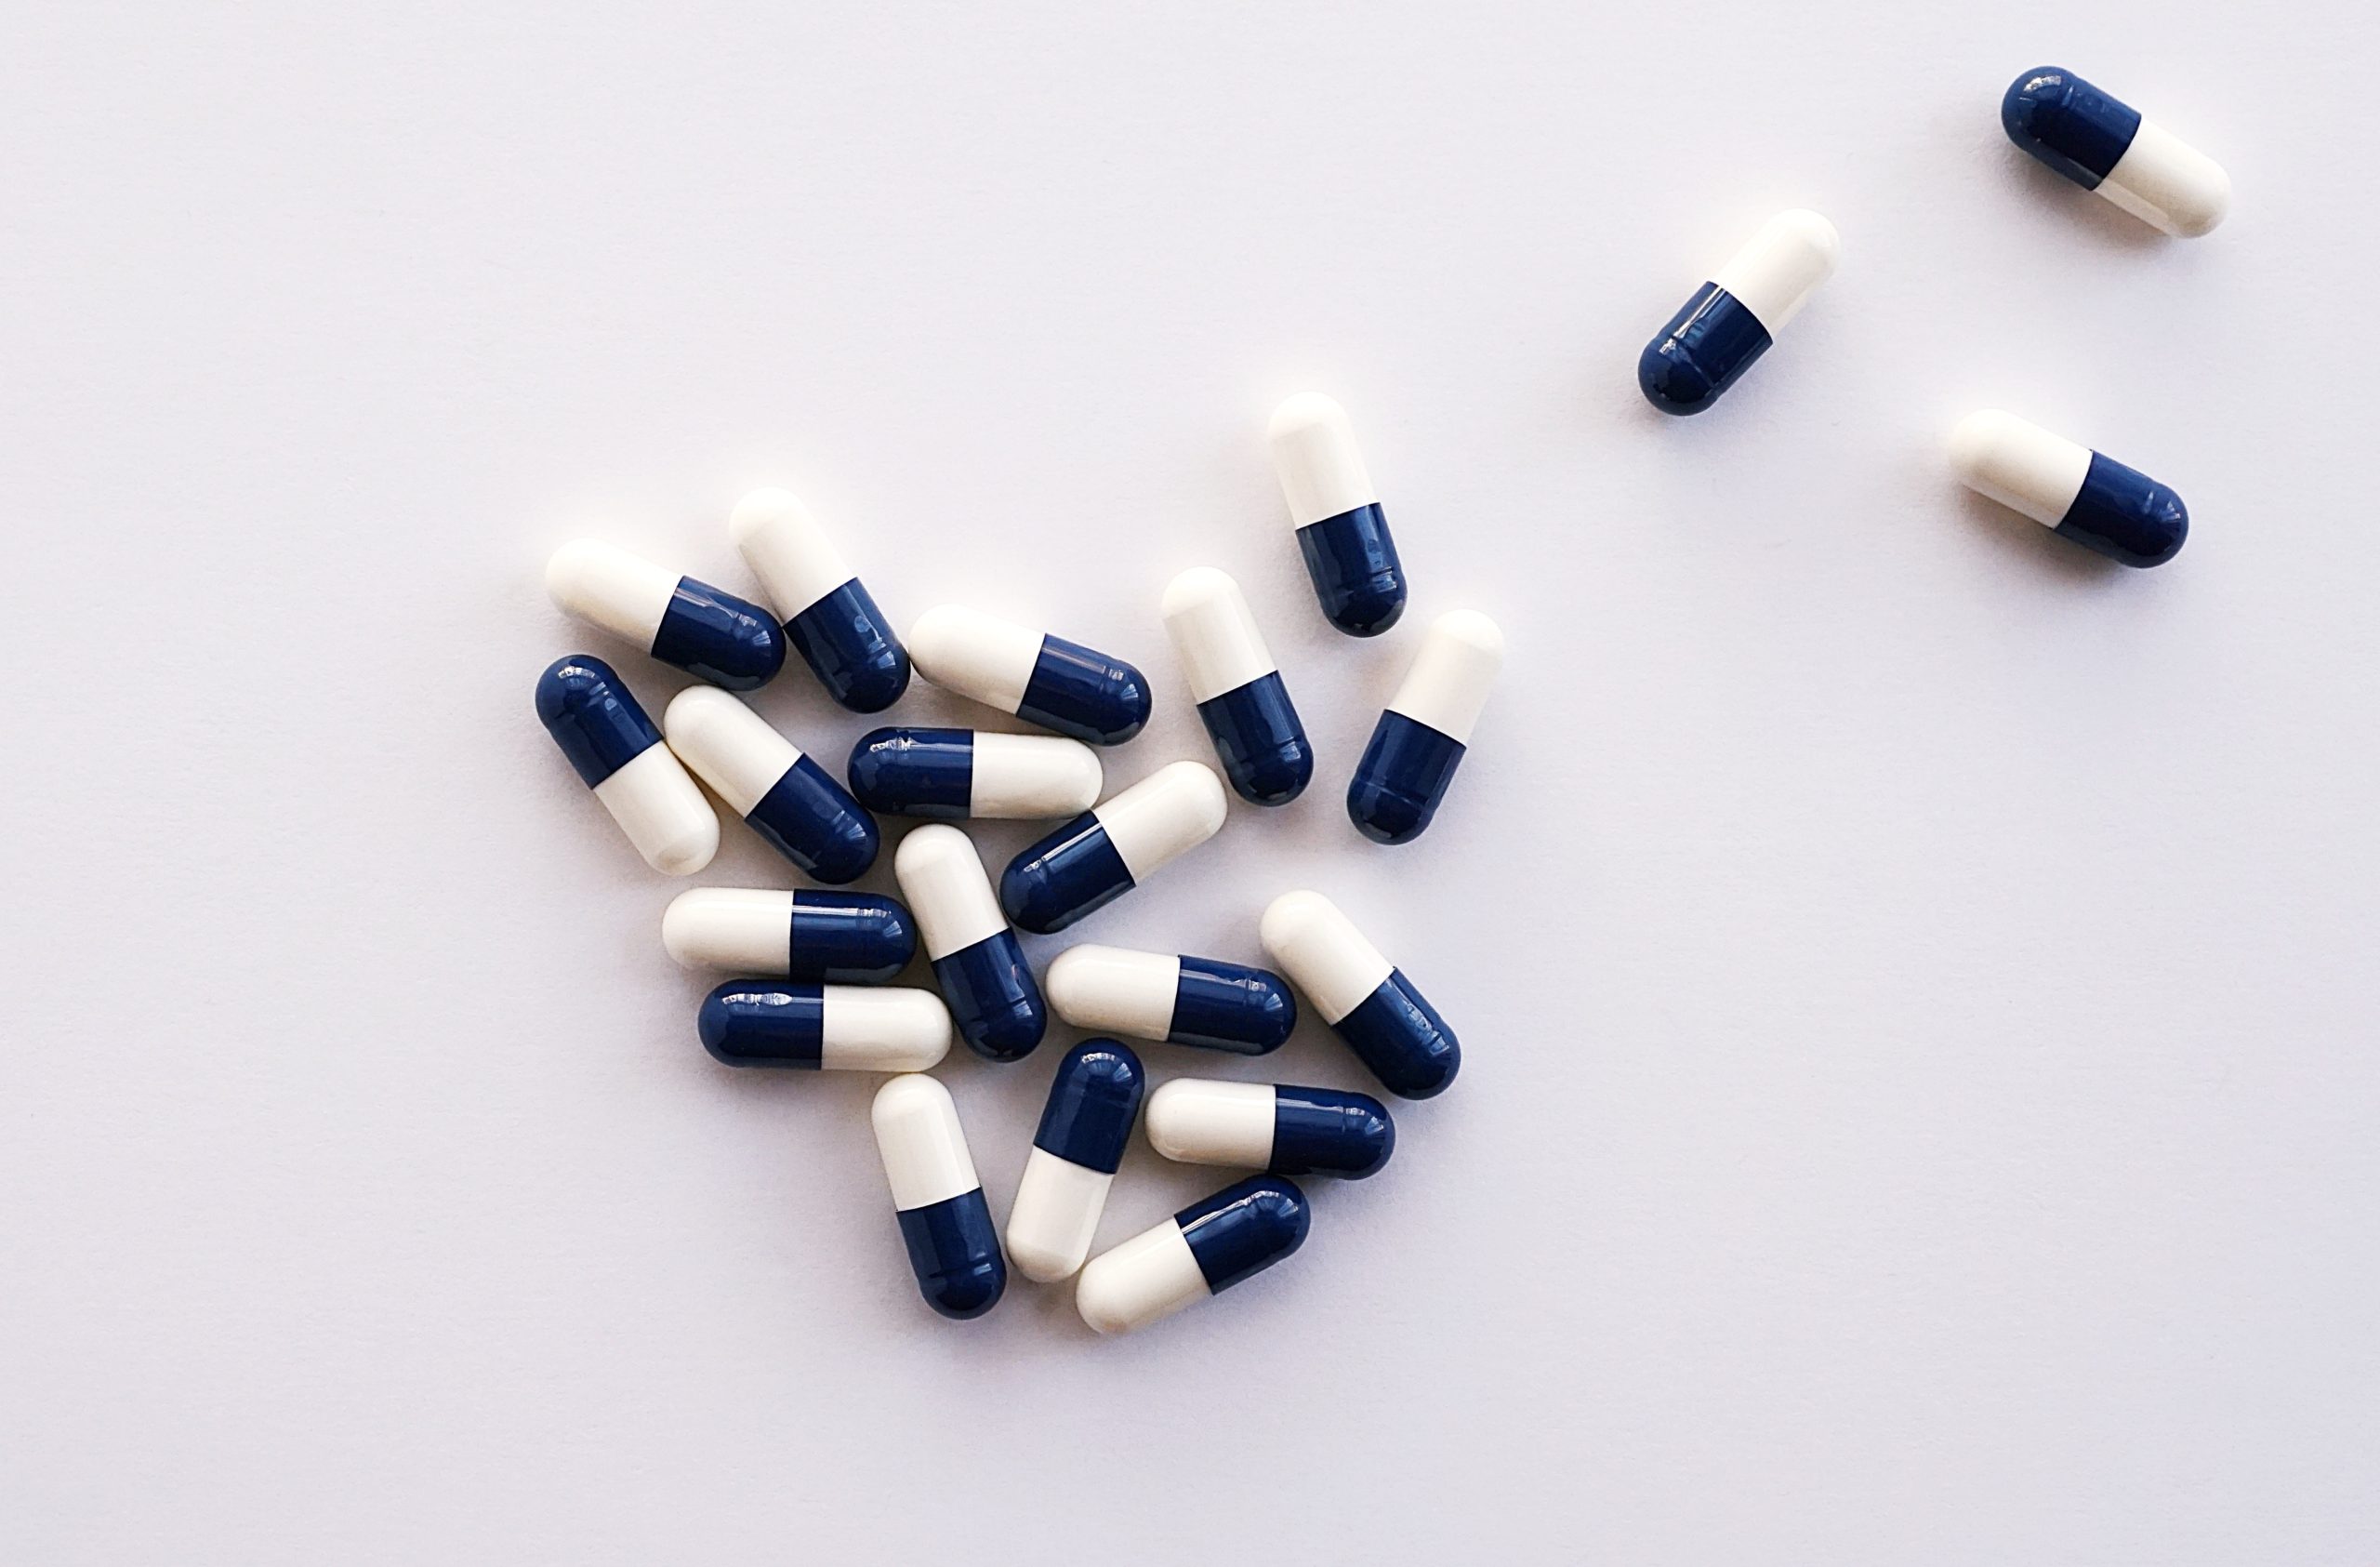 Pile of blue and pink vancomycin pills on table